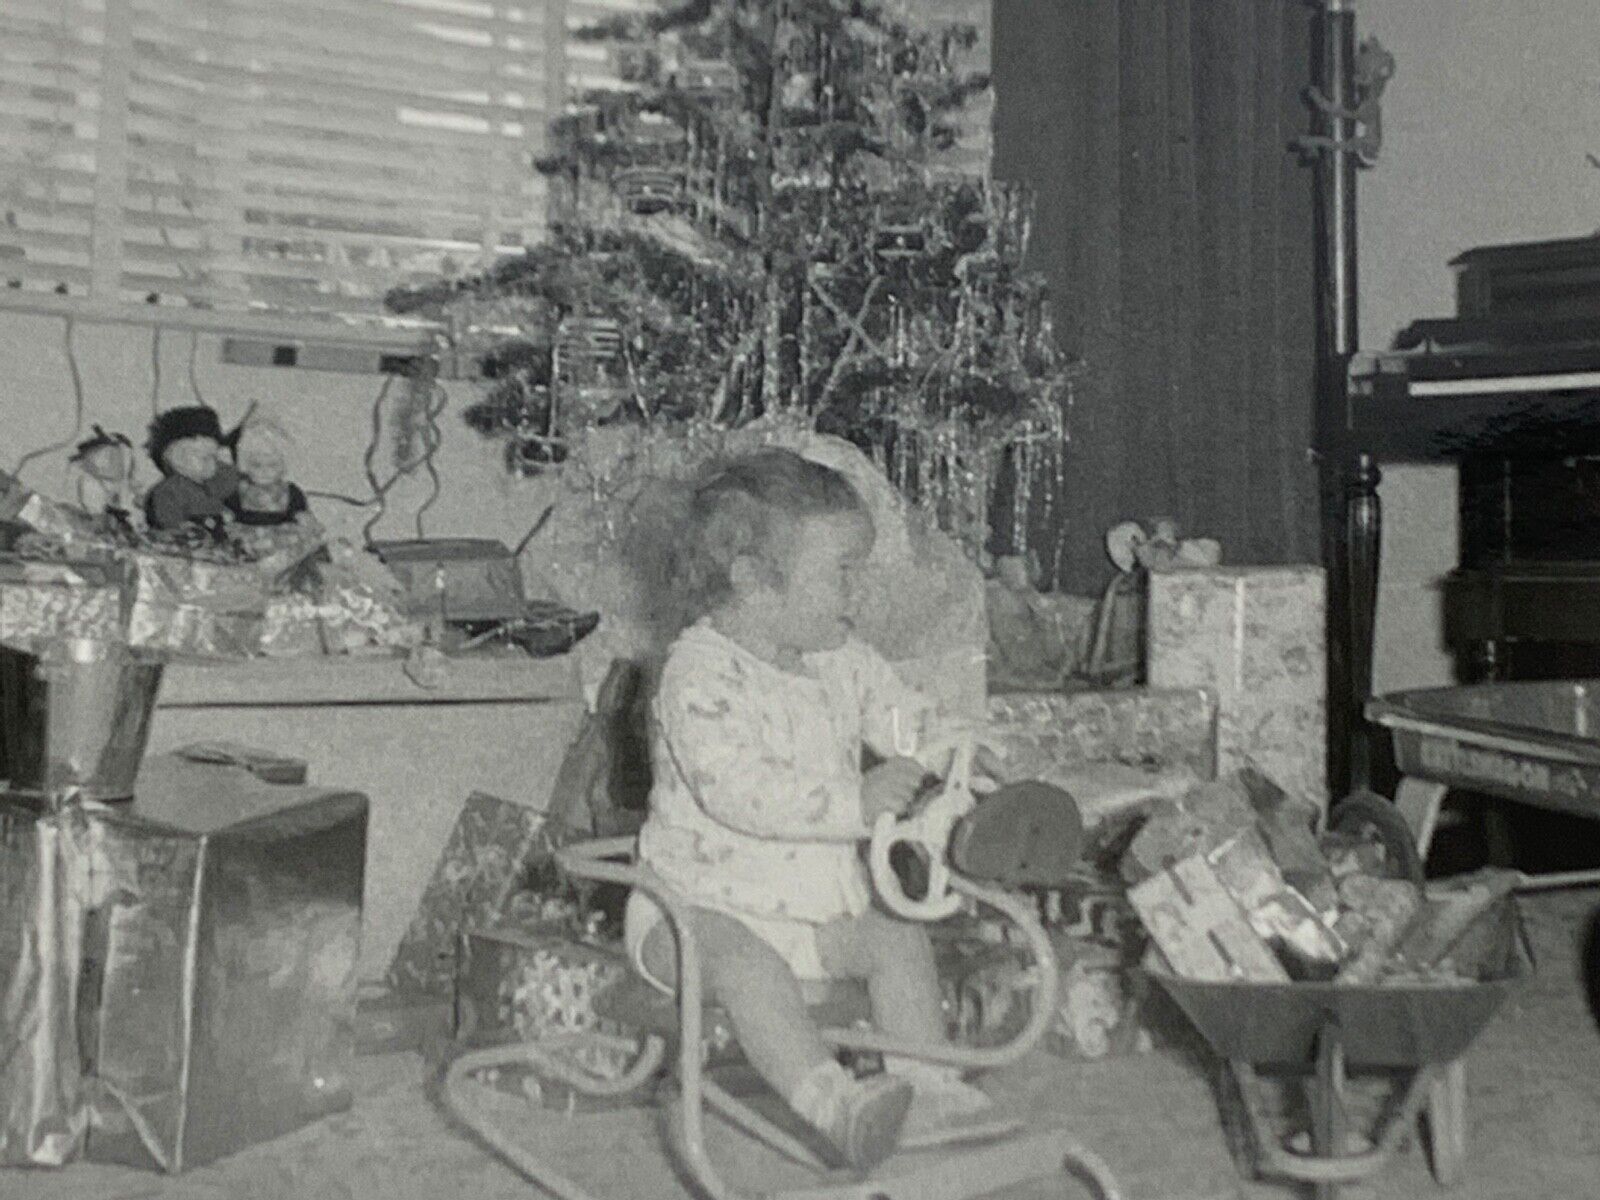 (AaB) Original FOUND PHOTO Photograph Snapshot 1957 Christmas Tree Morning Wagon